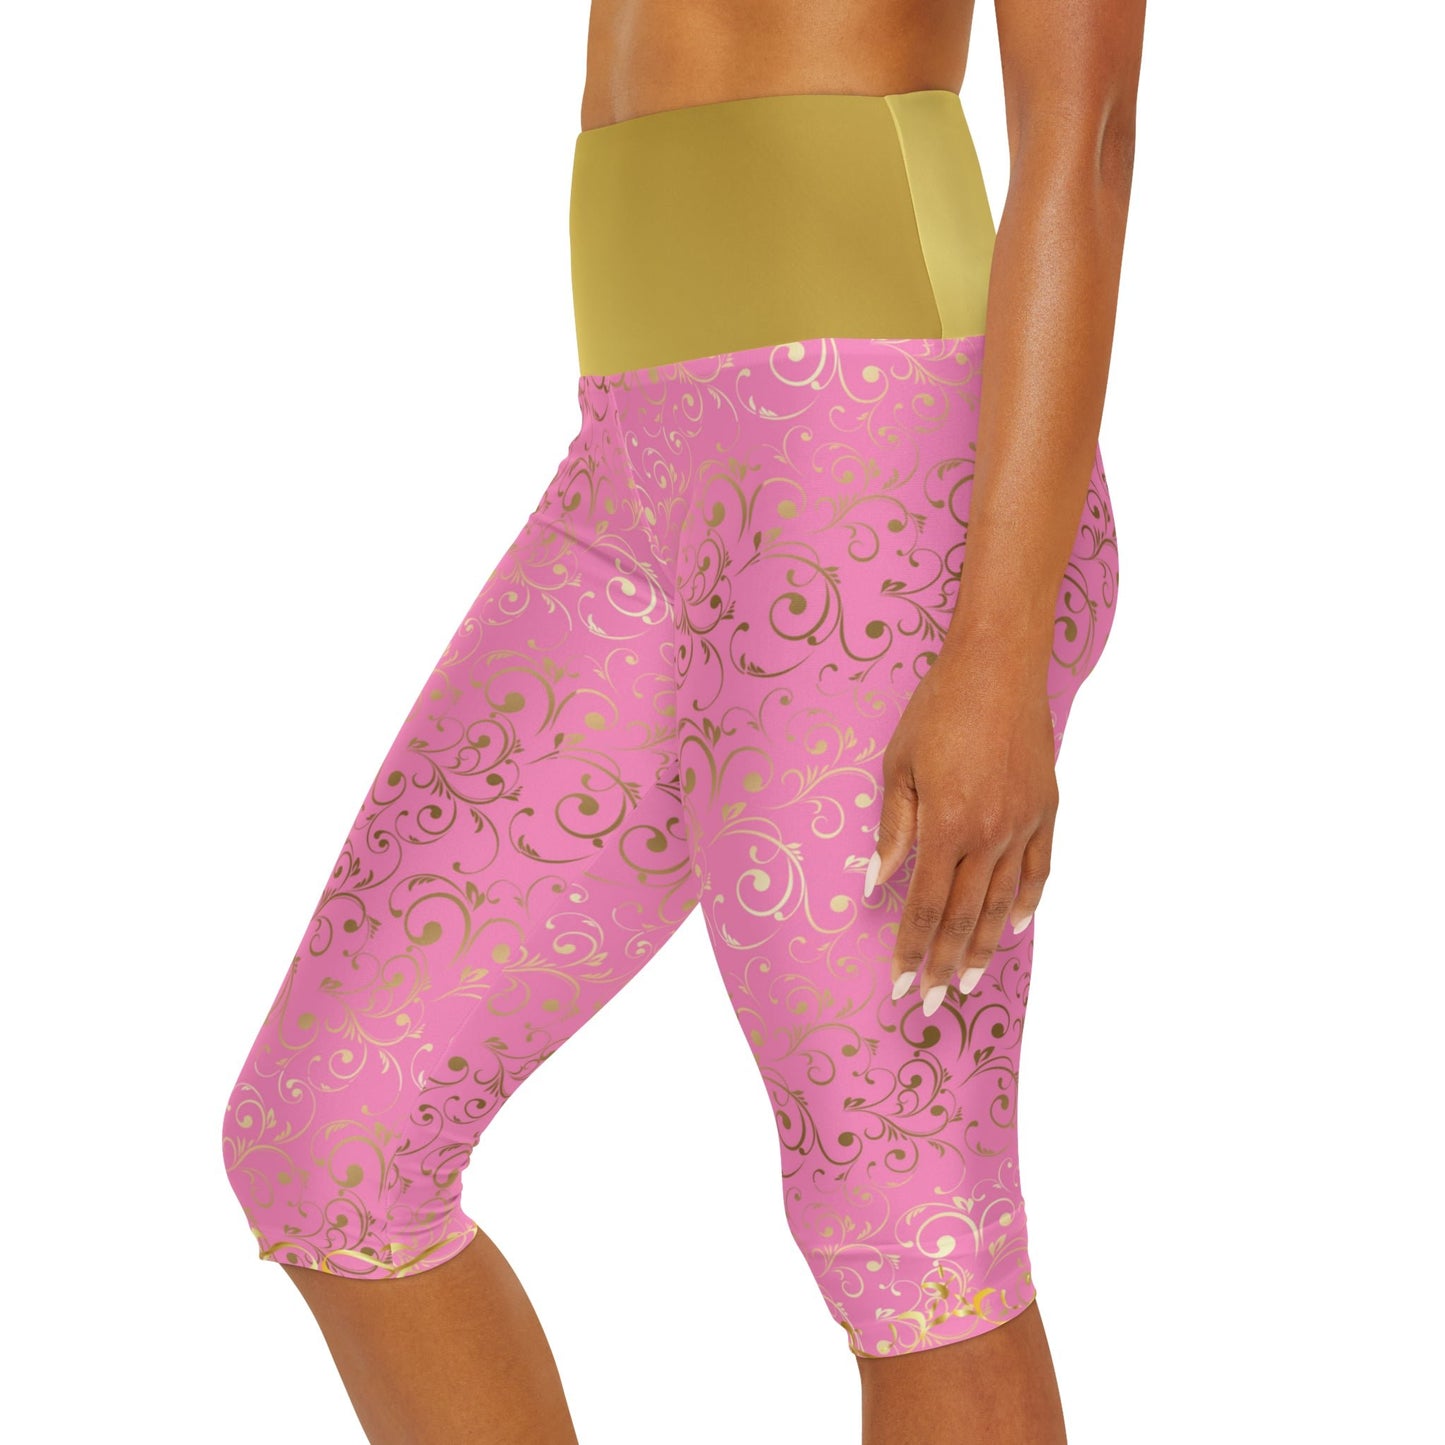 Sleeping Princess Yoga Capri Leggings - Running Costume, Cosplay All Over PrintAOPAOP Clothing#tag4##tag5##tag6#